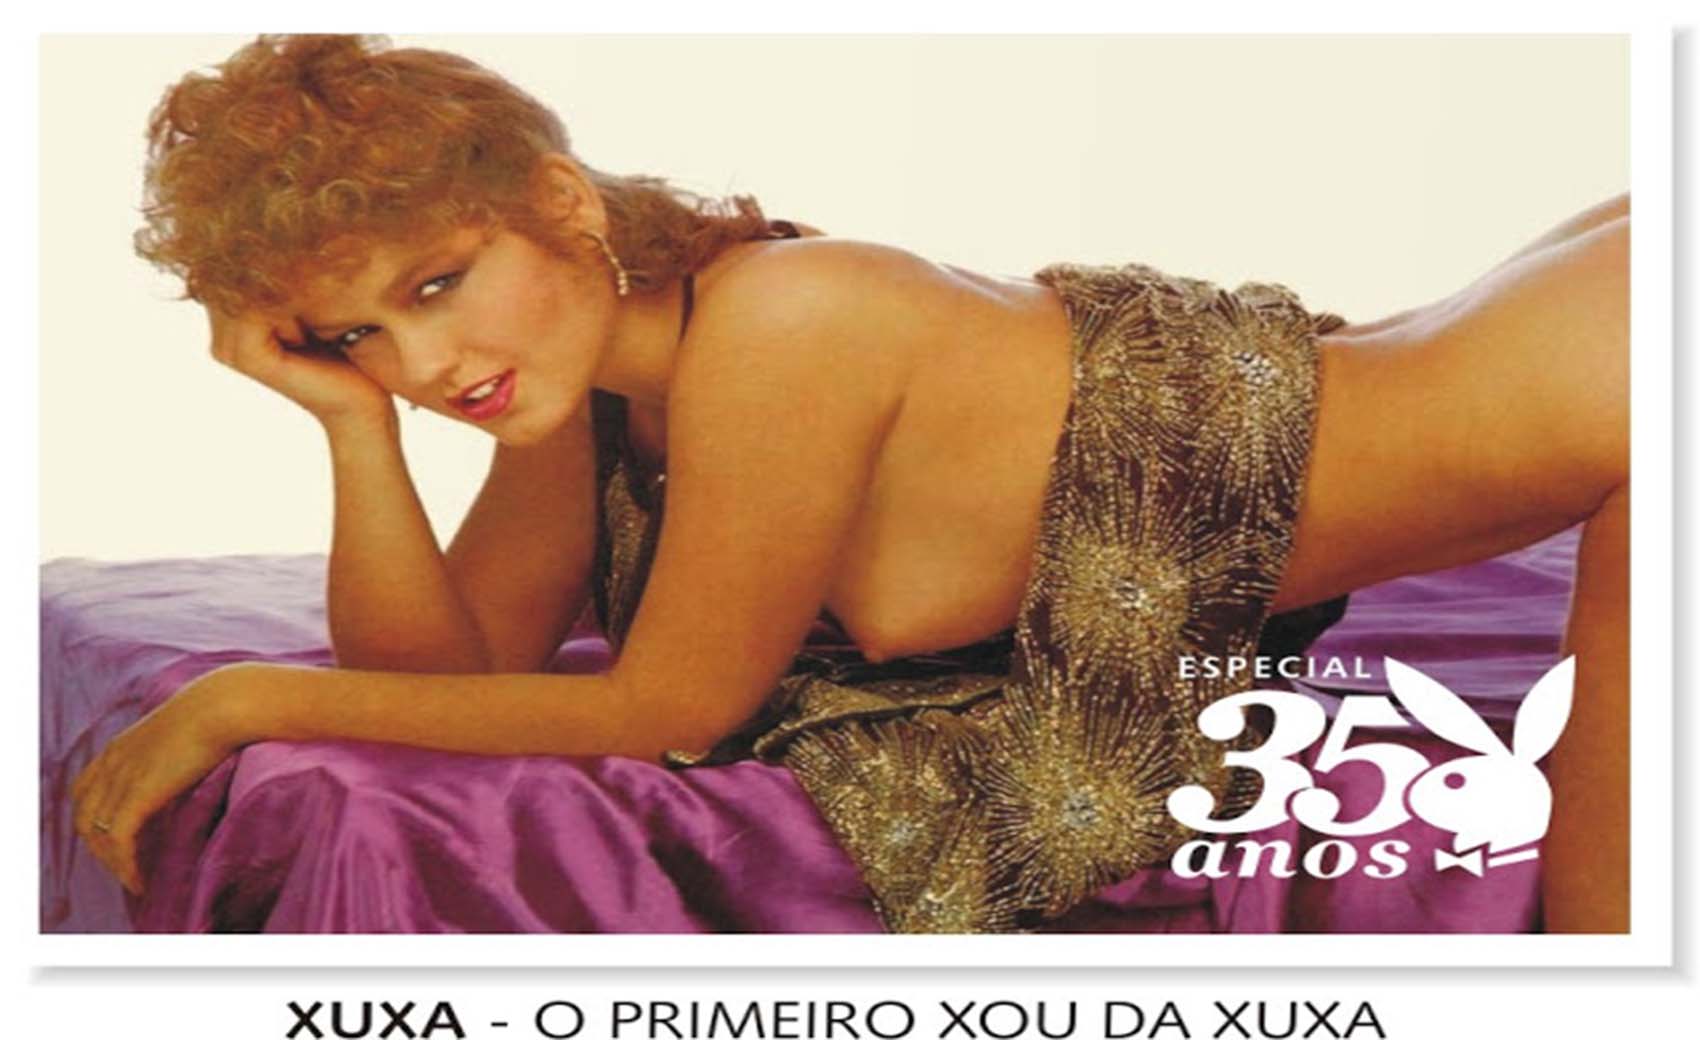 Naked Xuxa Meneghel Added 07192016 By Thegoonerafc02 